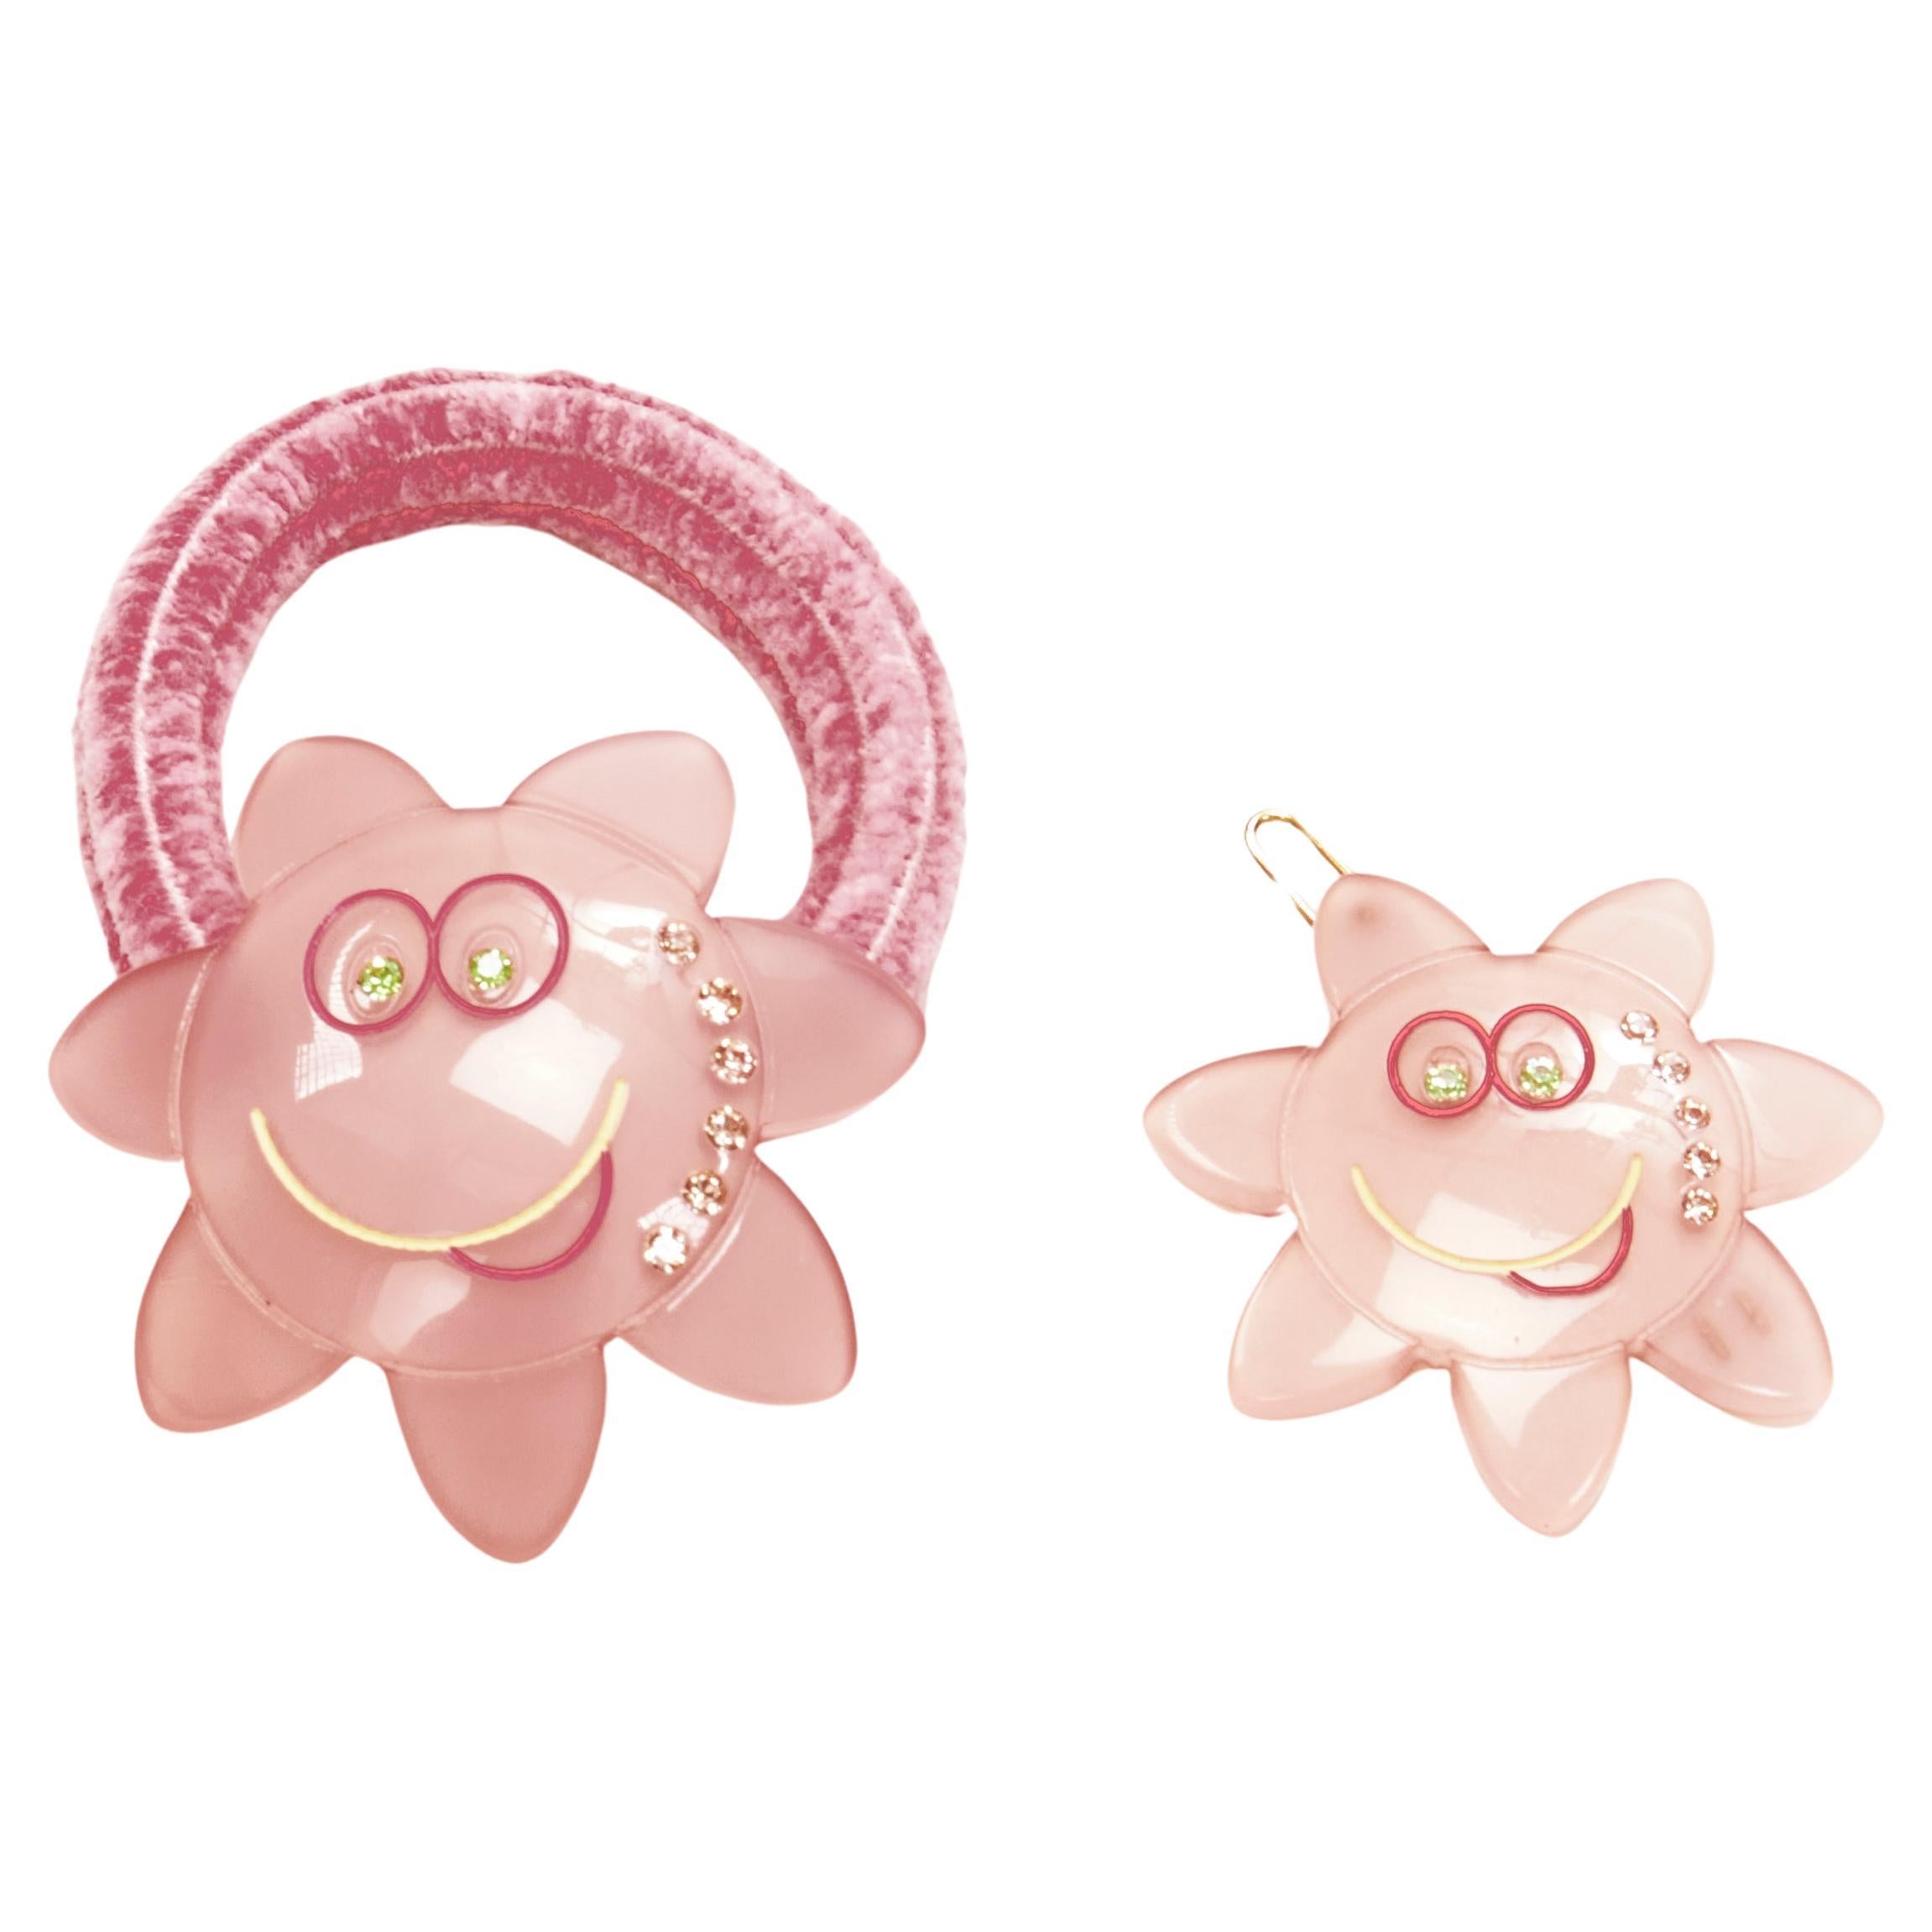 CHIC & MODE Alexandre Zouari pink crystal smiley flower acrylic hair tie clip X2